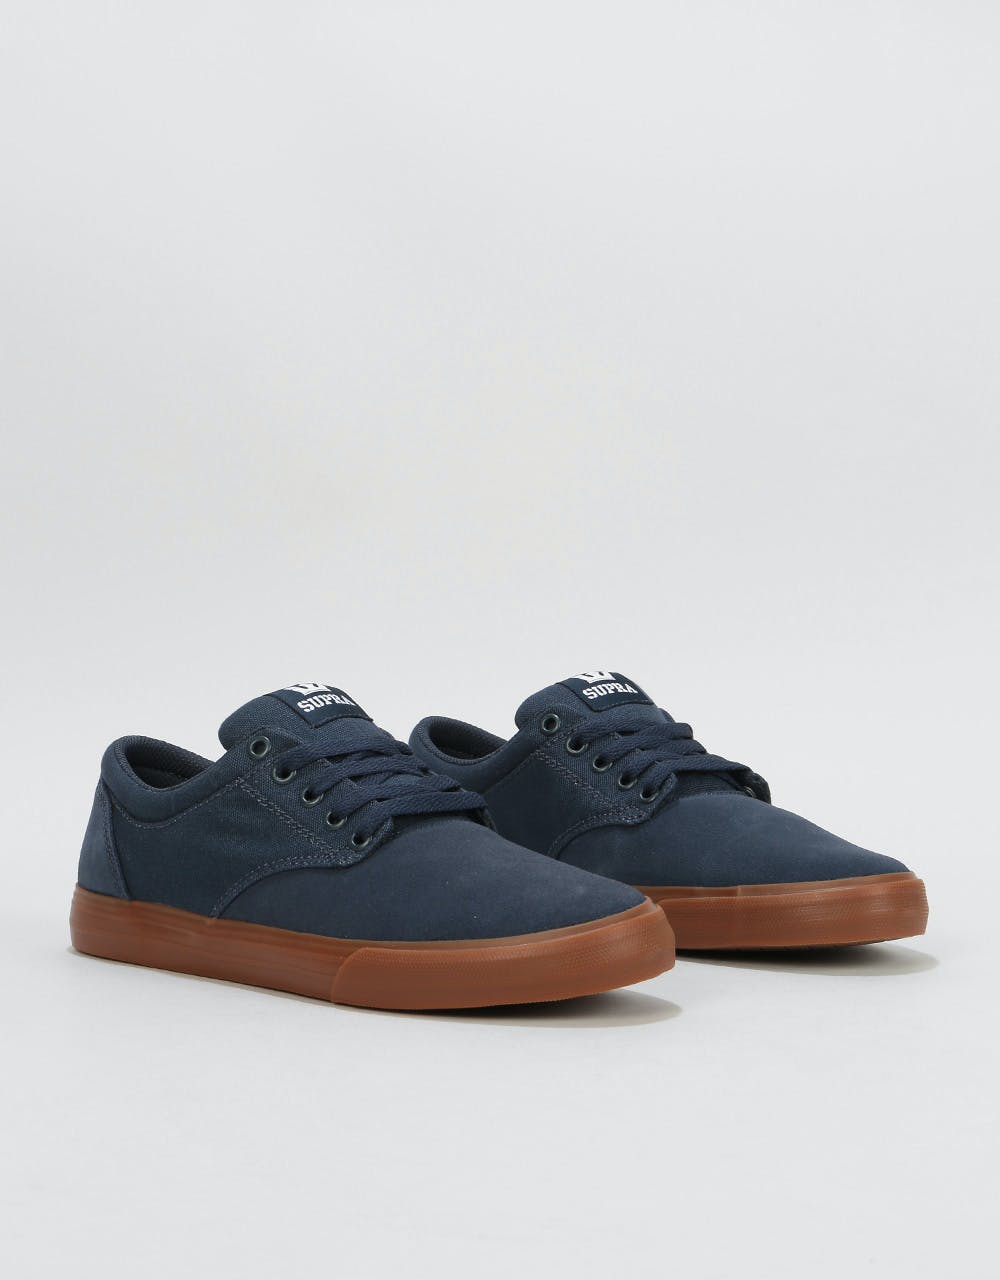 Supra Chino Skate Shoes - Navy/Navy-Gum